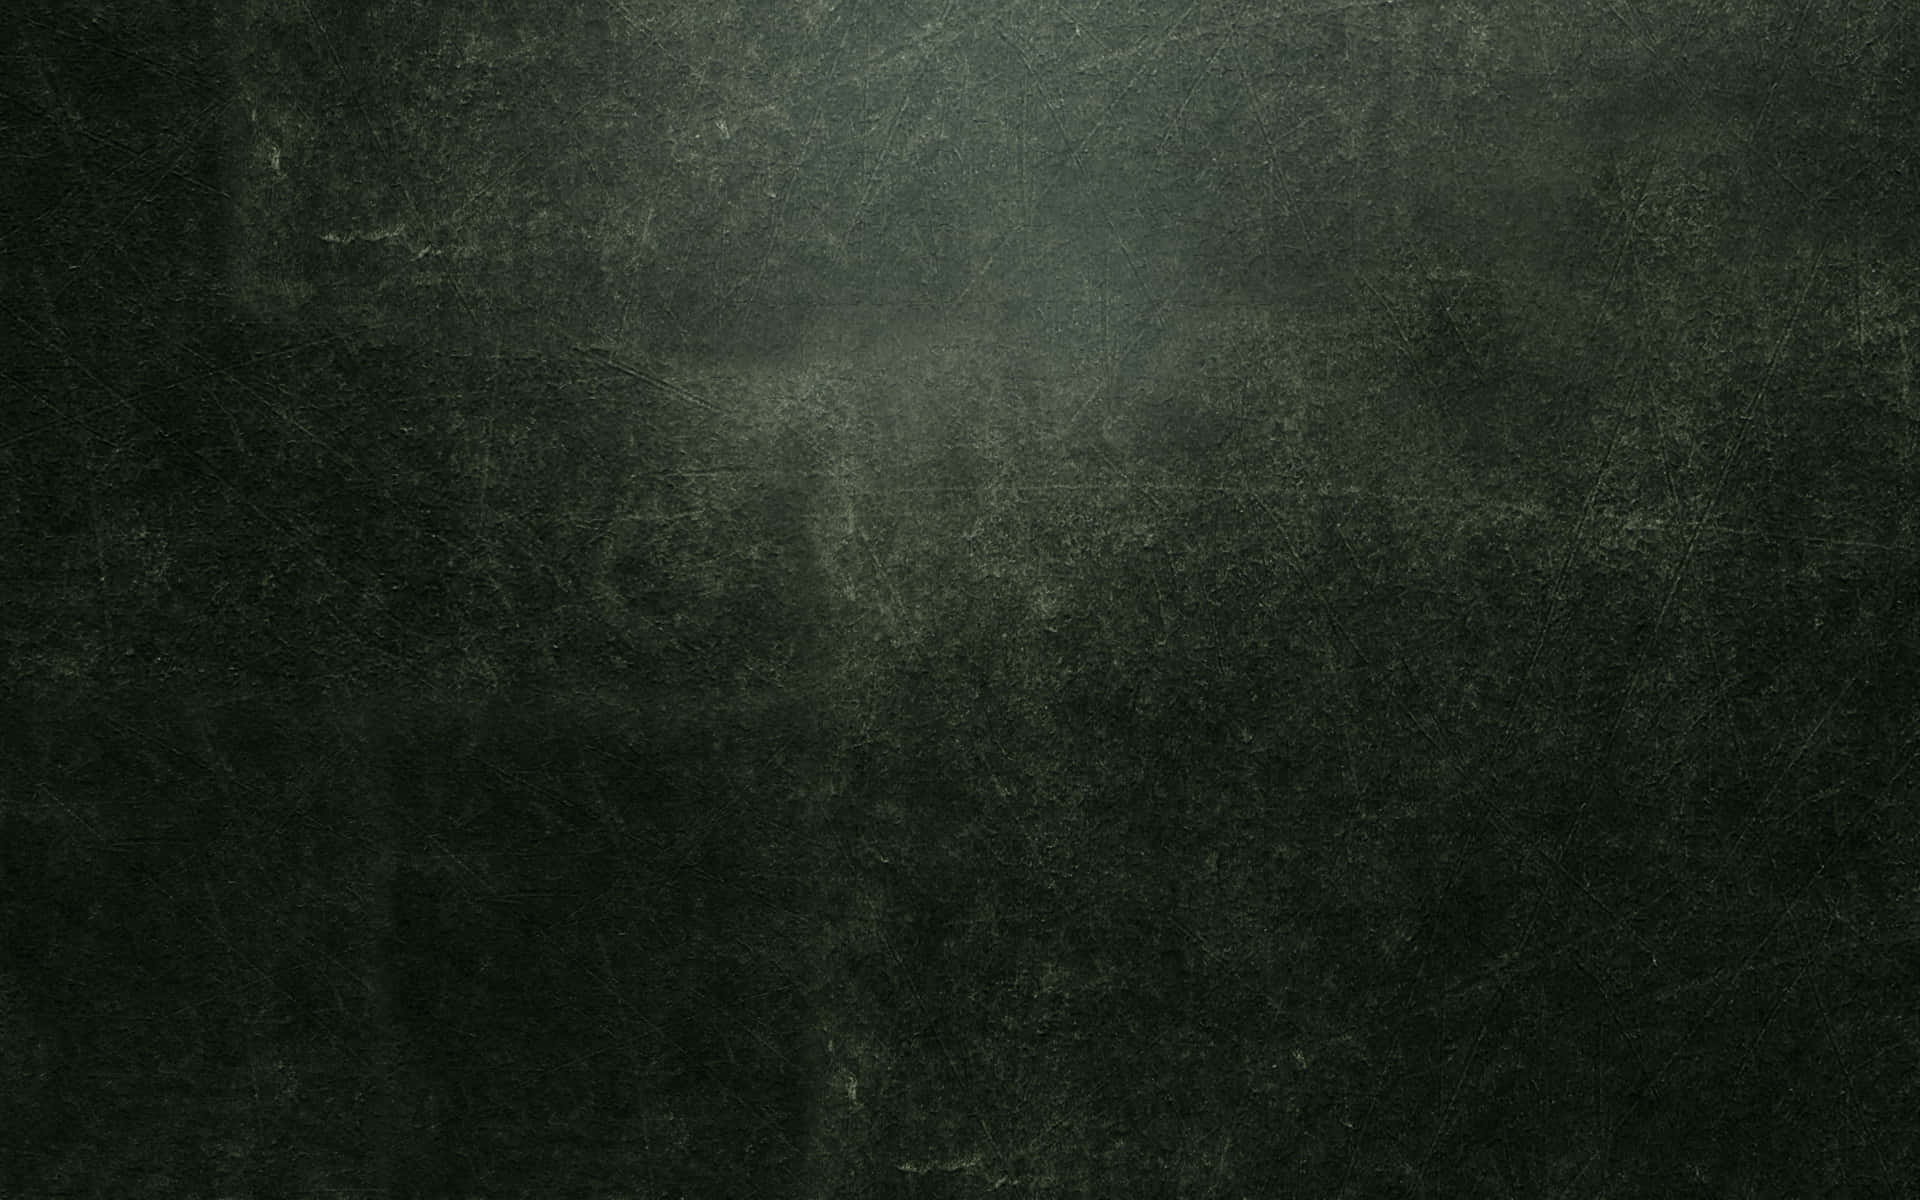 "A Moody Black Grunge Texture with Dark Overtones" Wallpaper